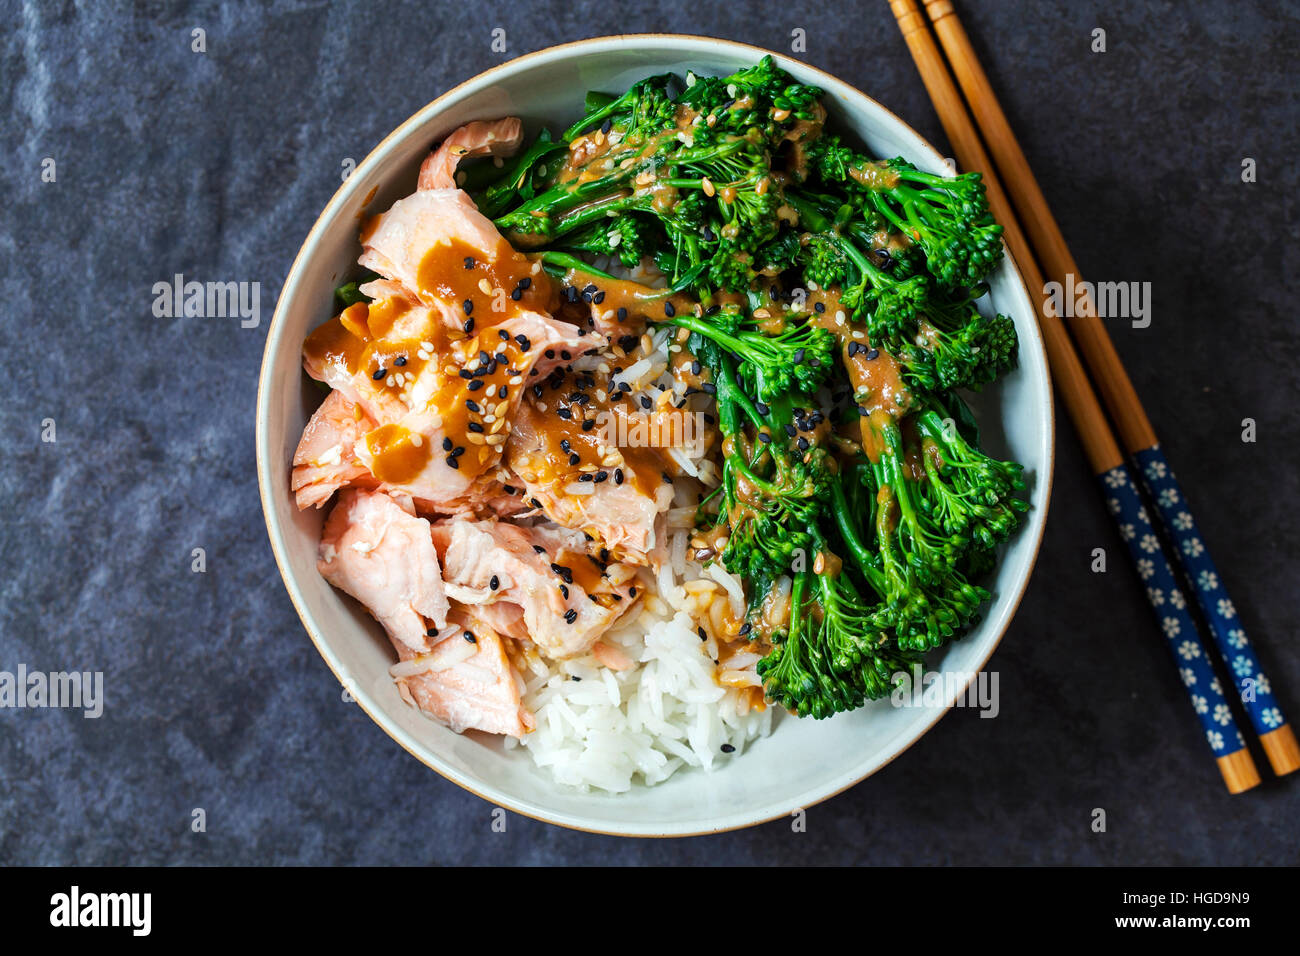 Pochiertes Lachsfilet mit Brokkoli, Reis und Miso-sauce Stockfoto